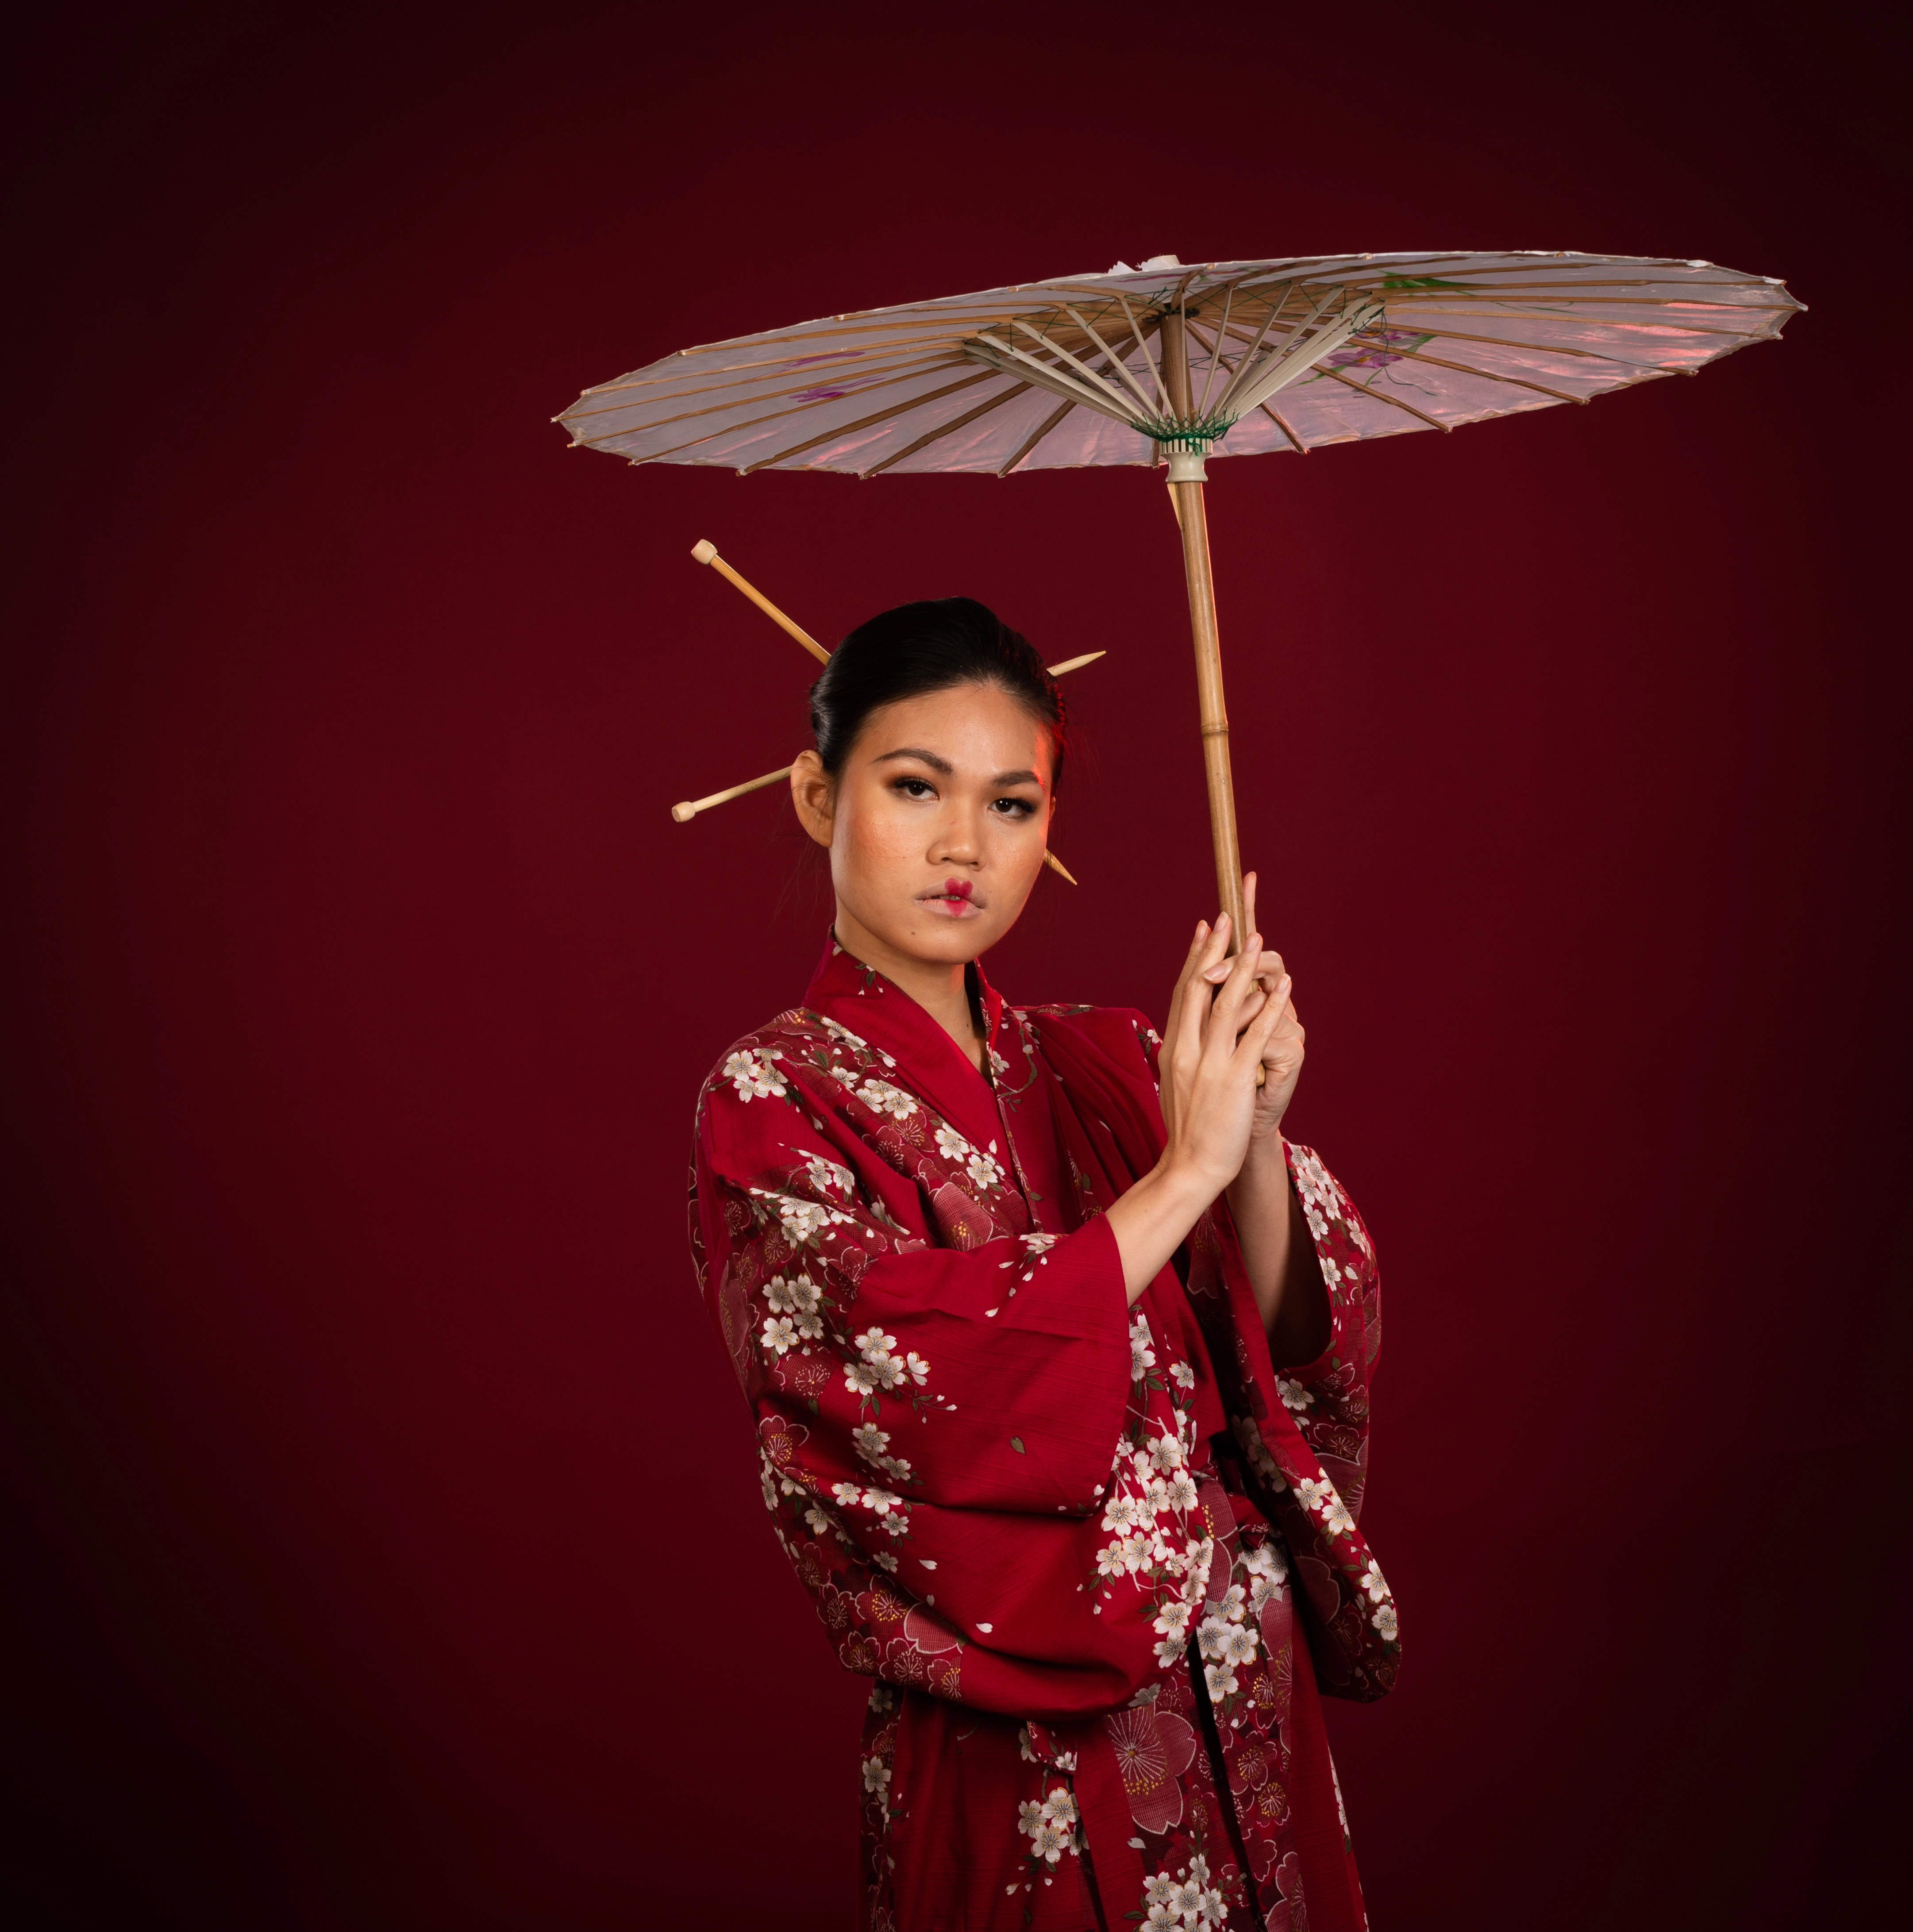 Asian girl with umbrella and Red Kimono Studio-Photographer 